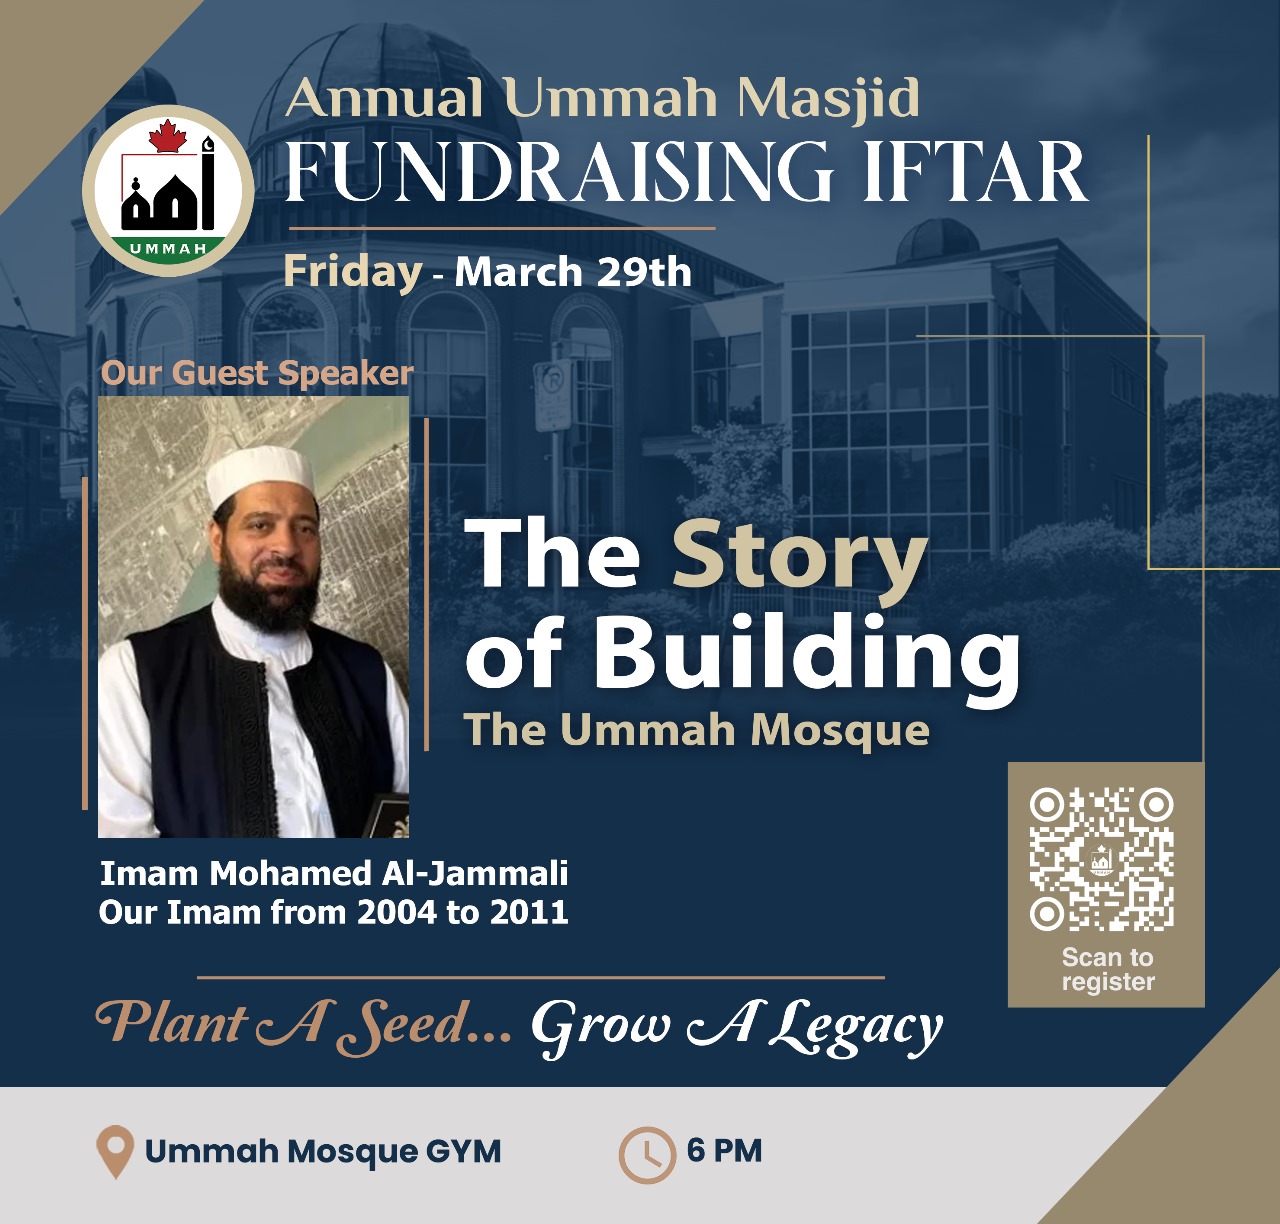 Ummah Masjid Fundraising Iftar